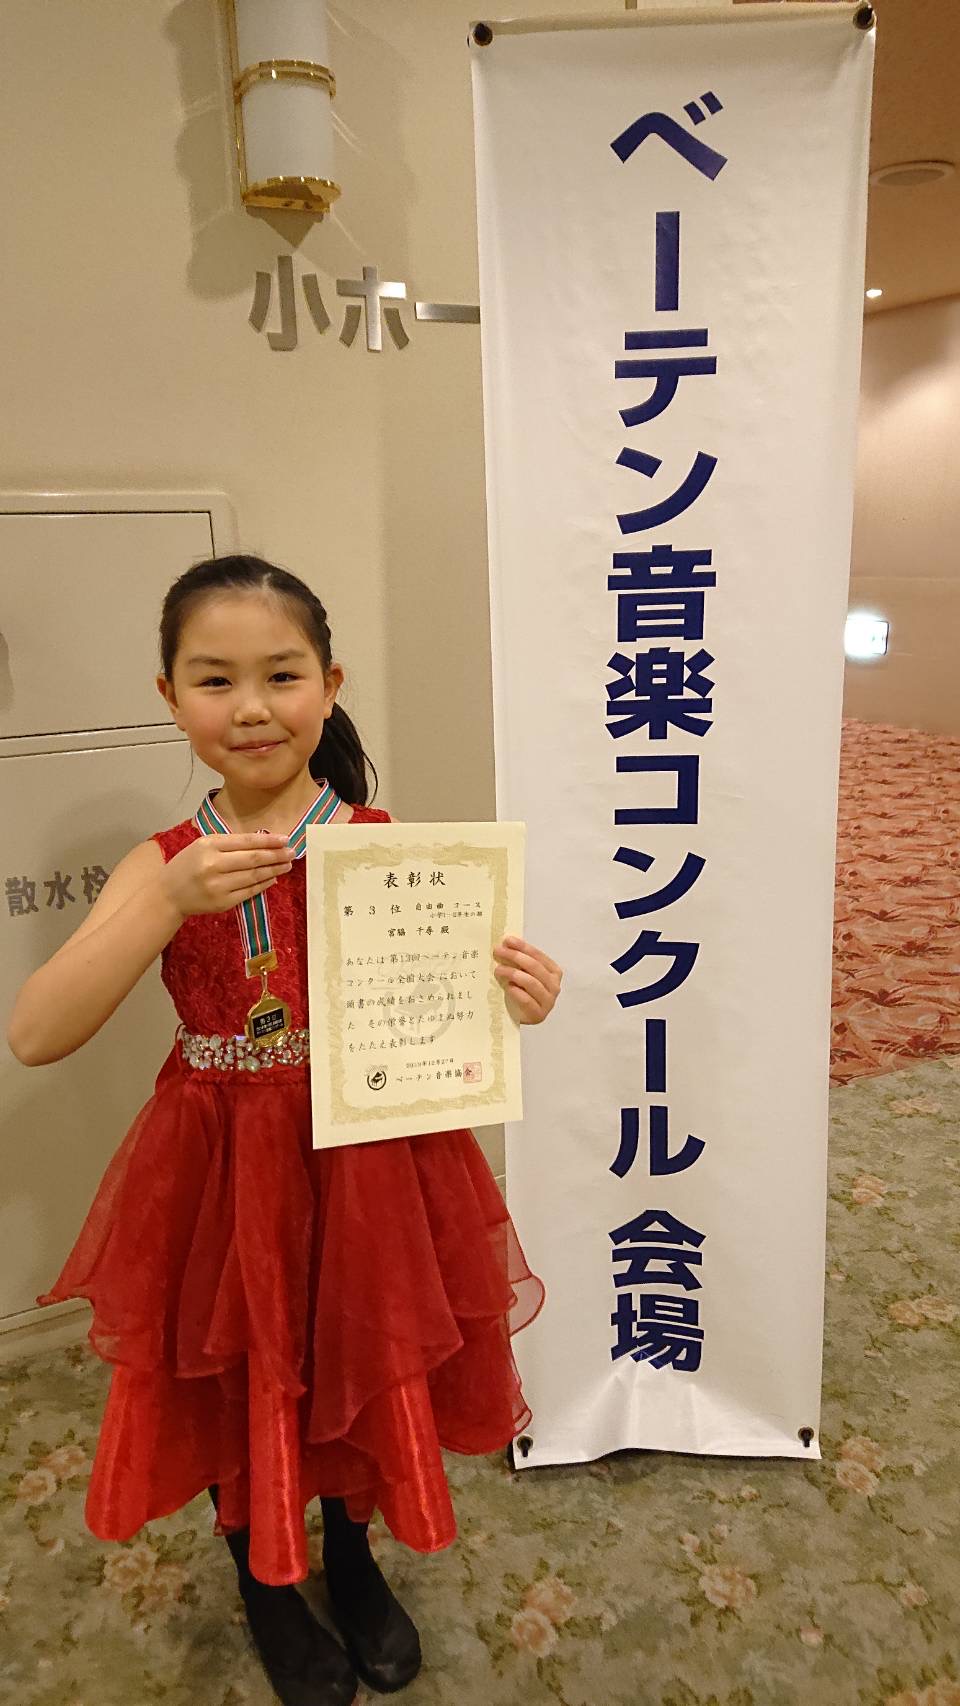 IMG_7052.JPG alt="ピアノ・リトミックの音楽教室Misuzu Music House。生徒さんが第13回べーテン音楽コンクール全国3位入賞しました。"